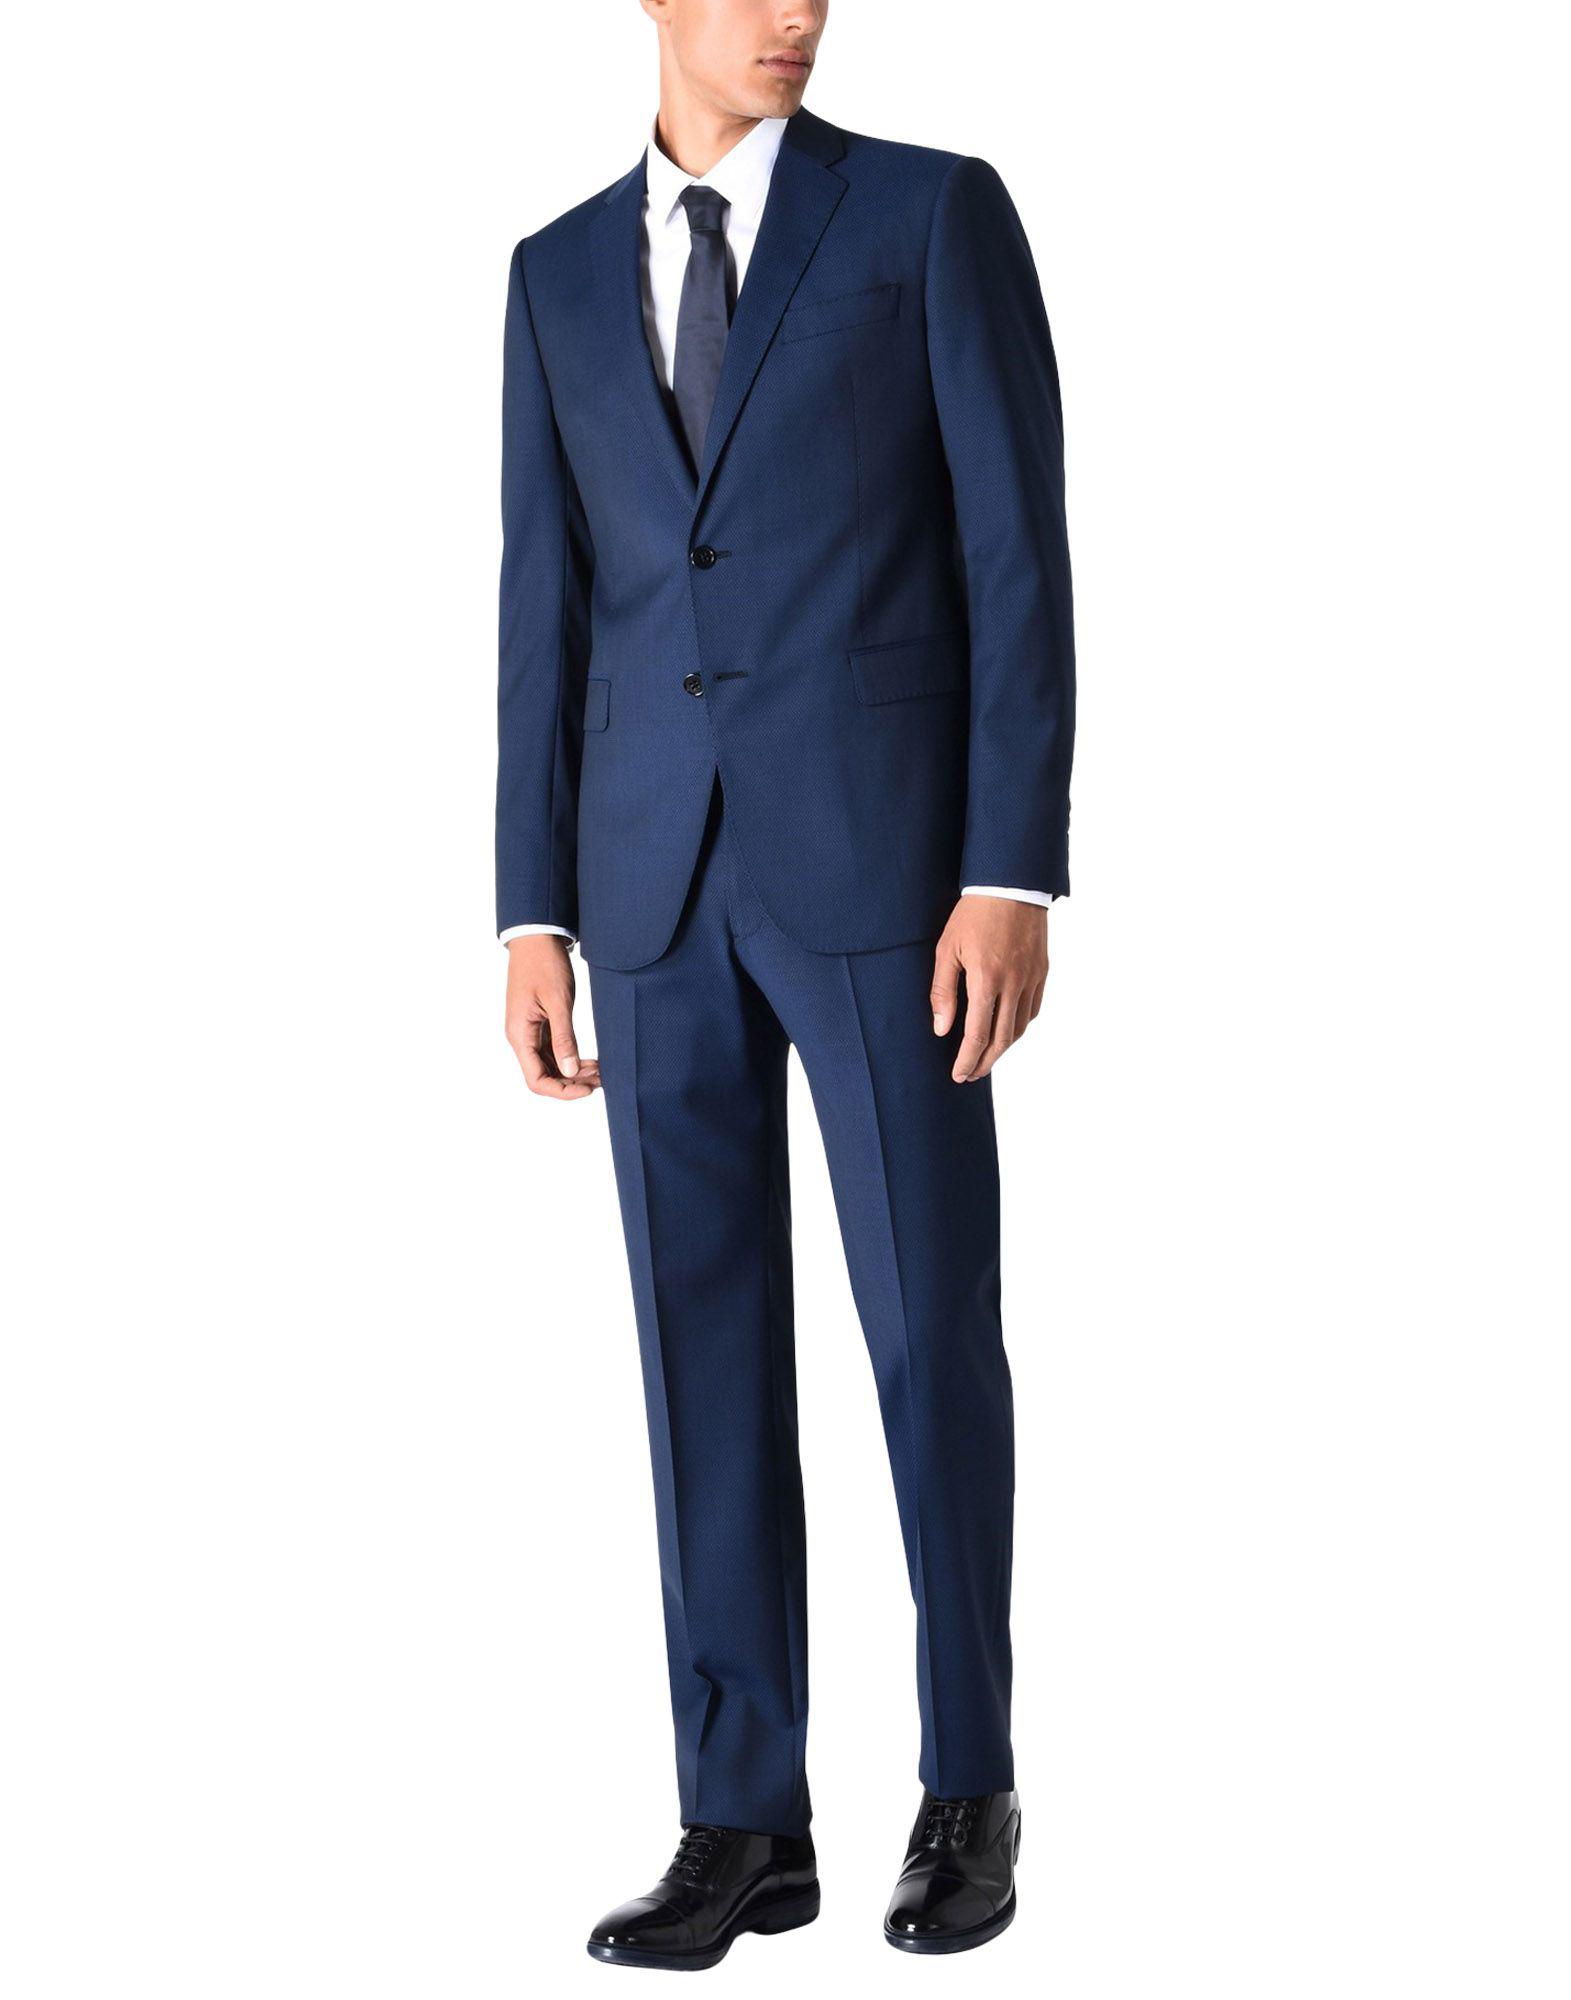 Emporio Armani Wool Suit in Dark Blue (Blue) for Men - Lyst